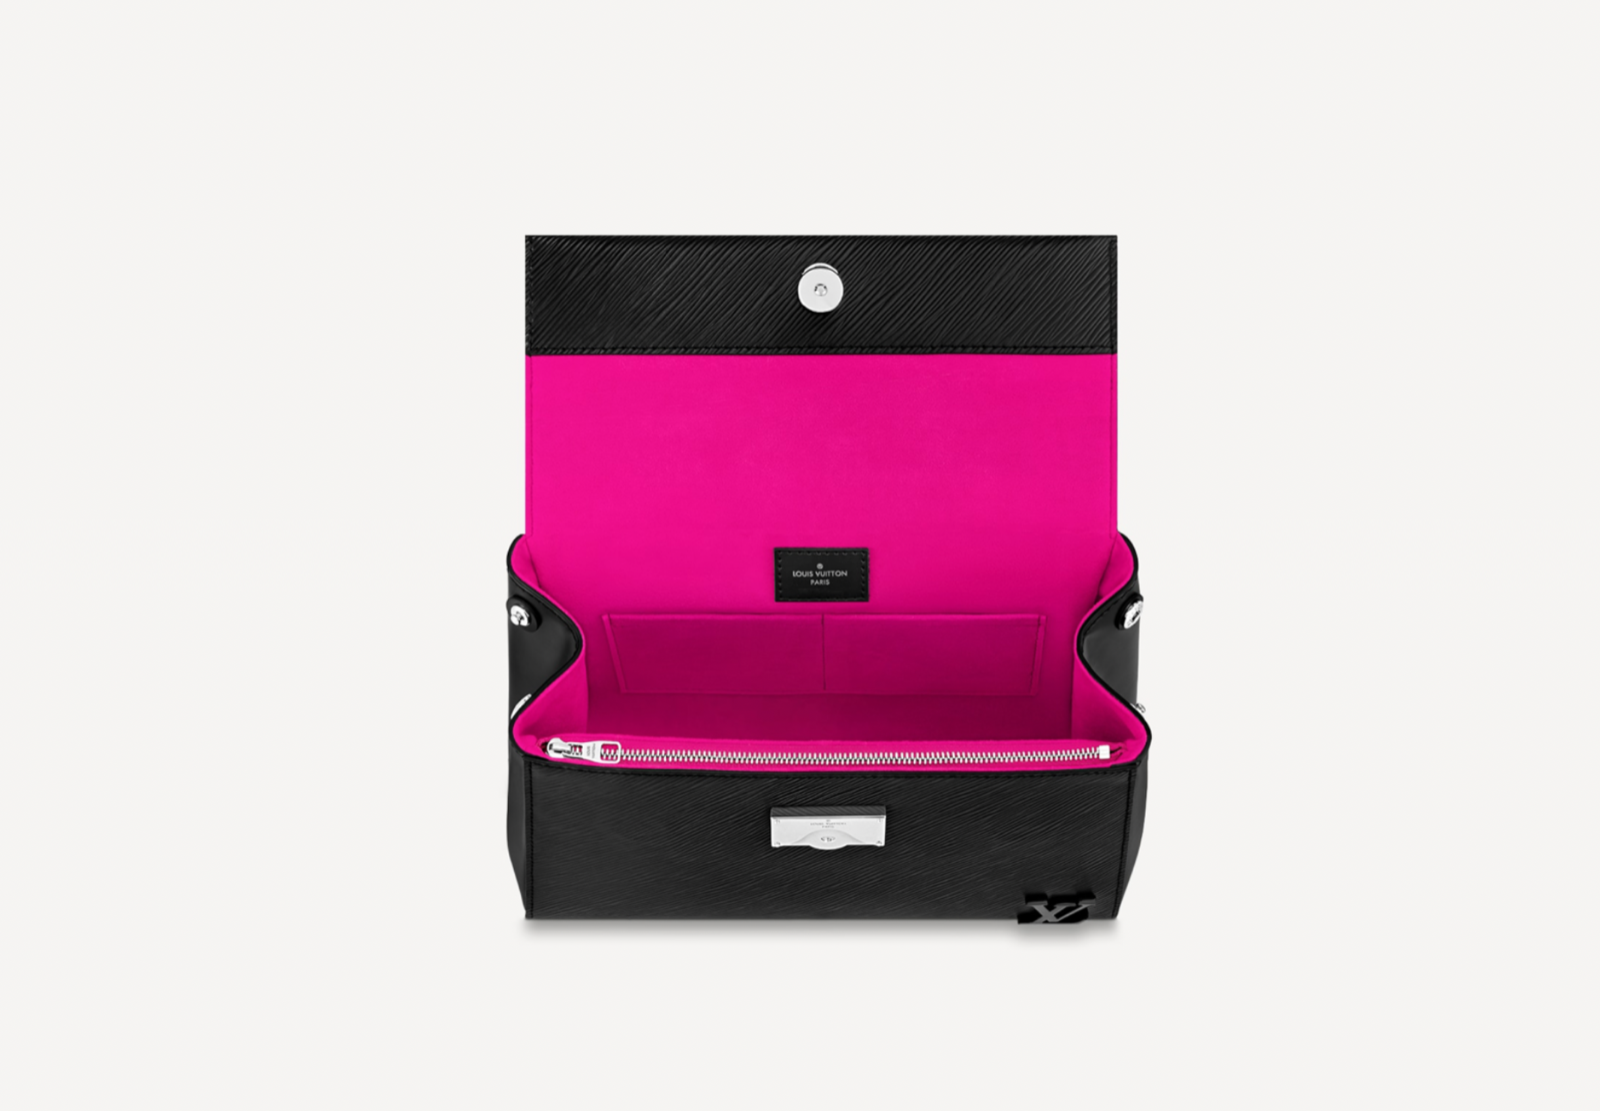 Cluny BB Calfskin/Monogram – Keeks Designer Handbags